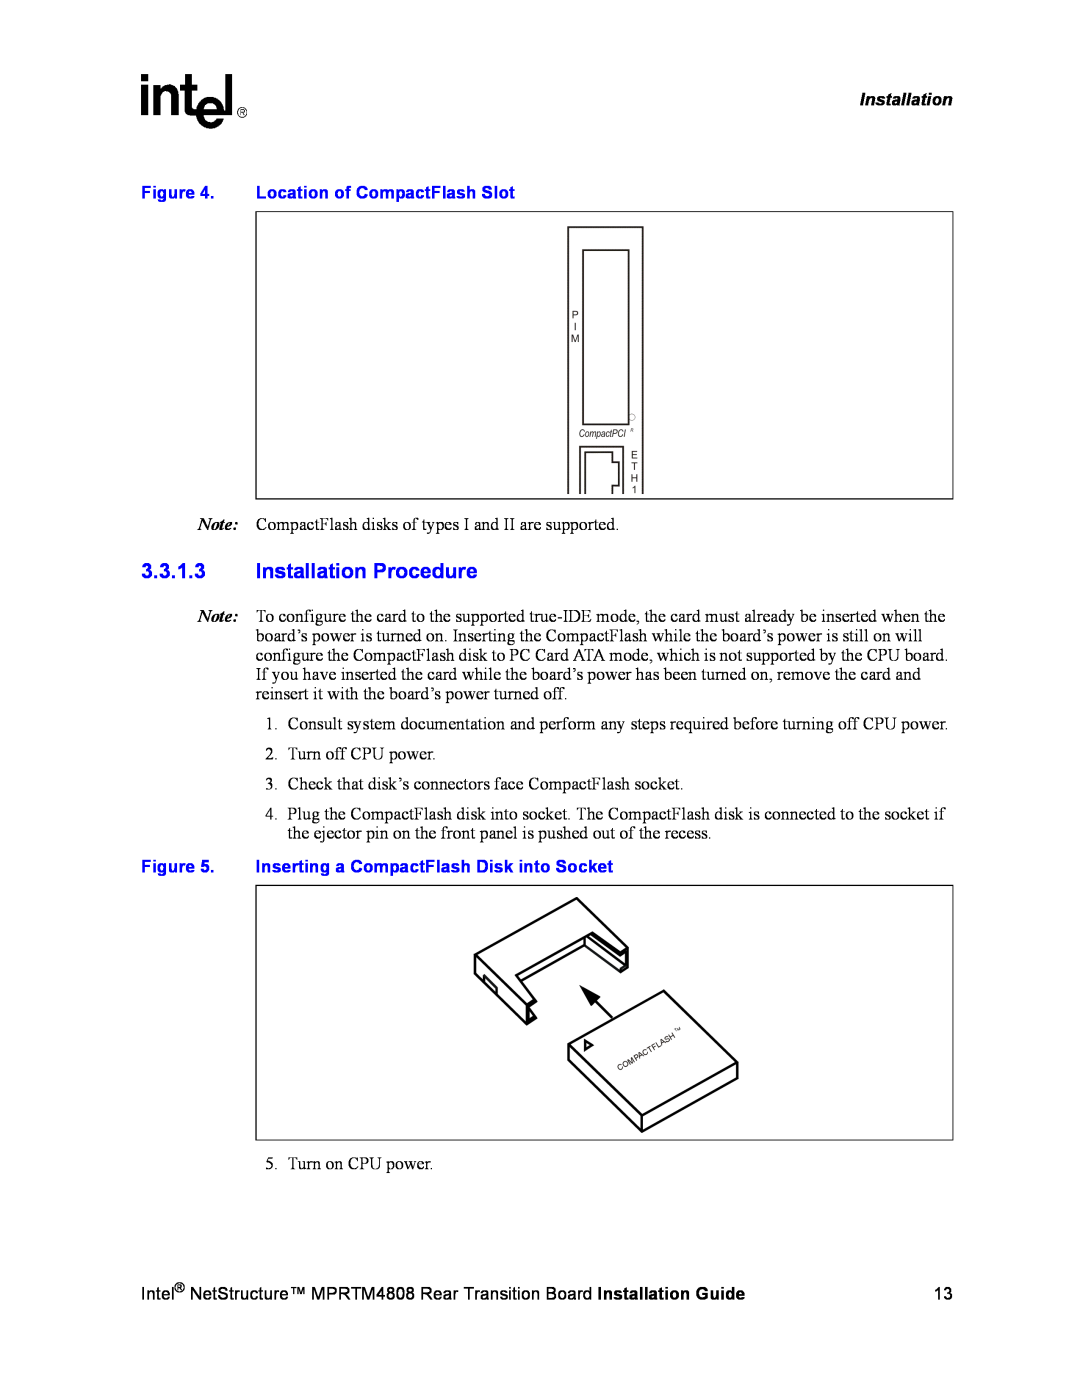 Intel MPRTM4808 manual 3.3.1.3Installation Procedure, Location of CompactFlash Slot 